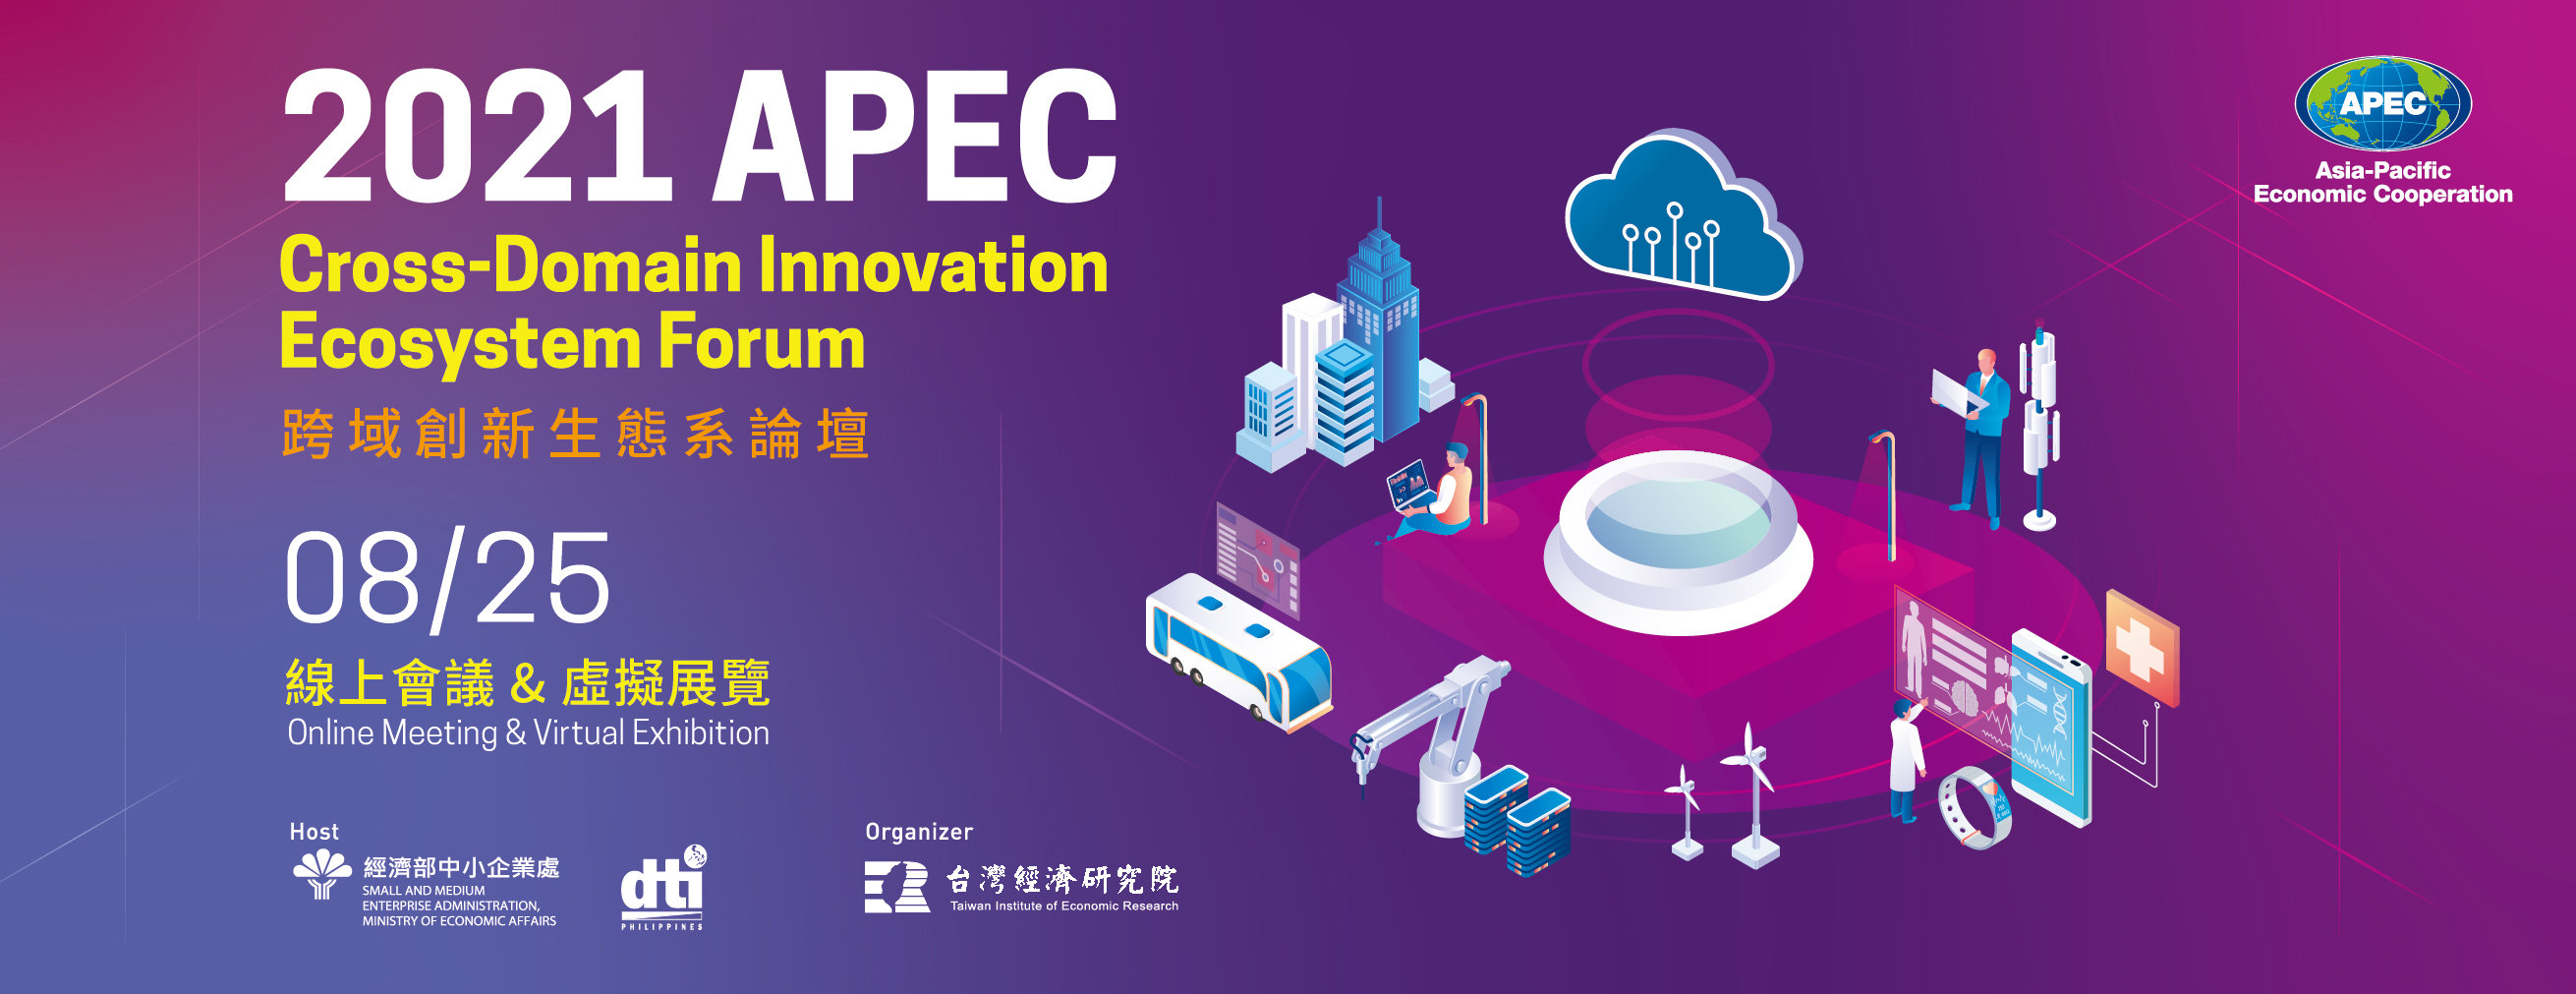 APEC Cross-Domain Innovation Ecosystem Initiative: Facilitate the Inclusive Growth of SMEs Through the Digital Platform Across the APEC Region